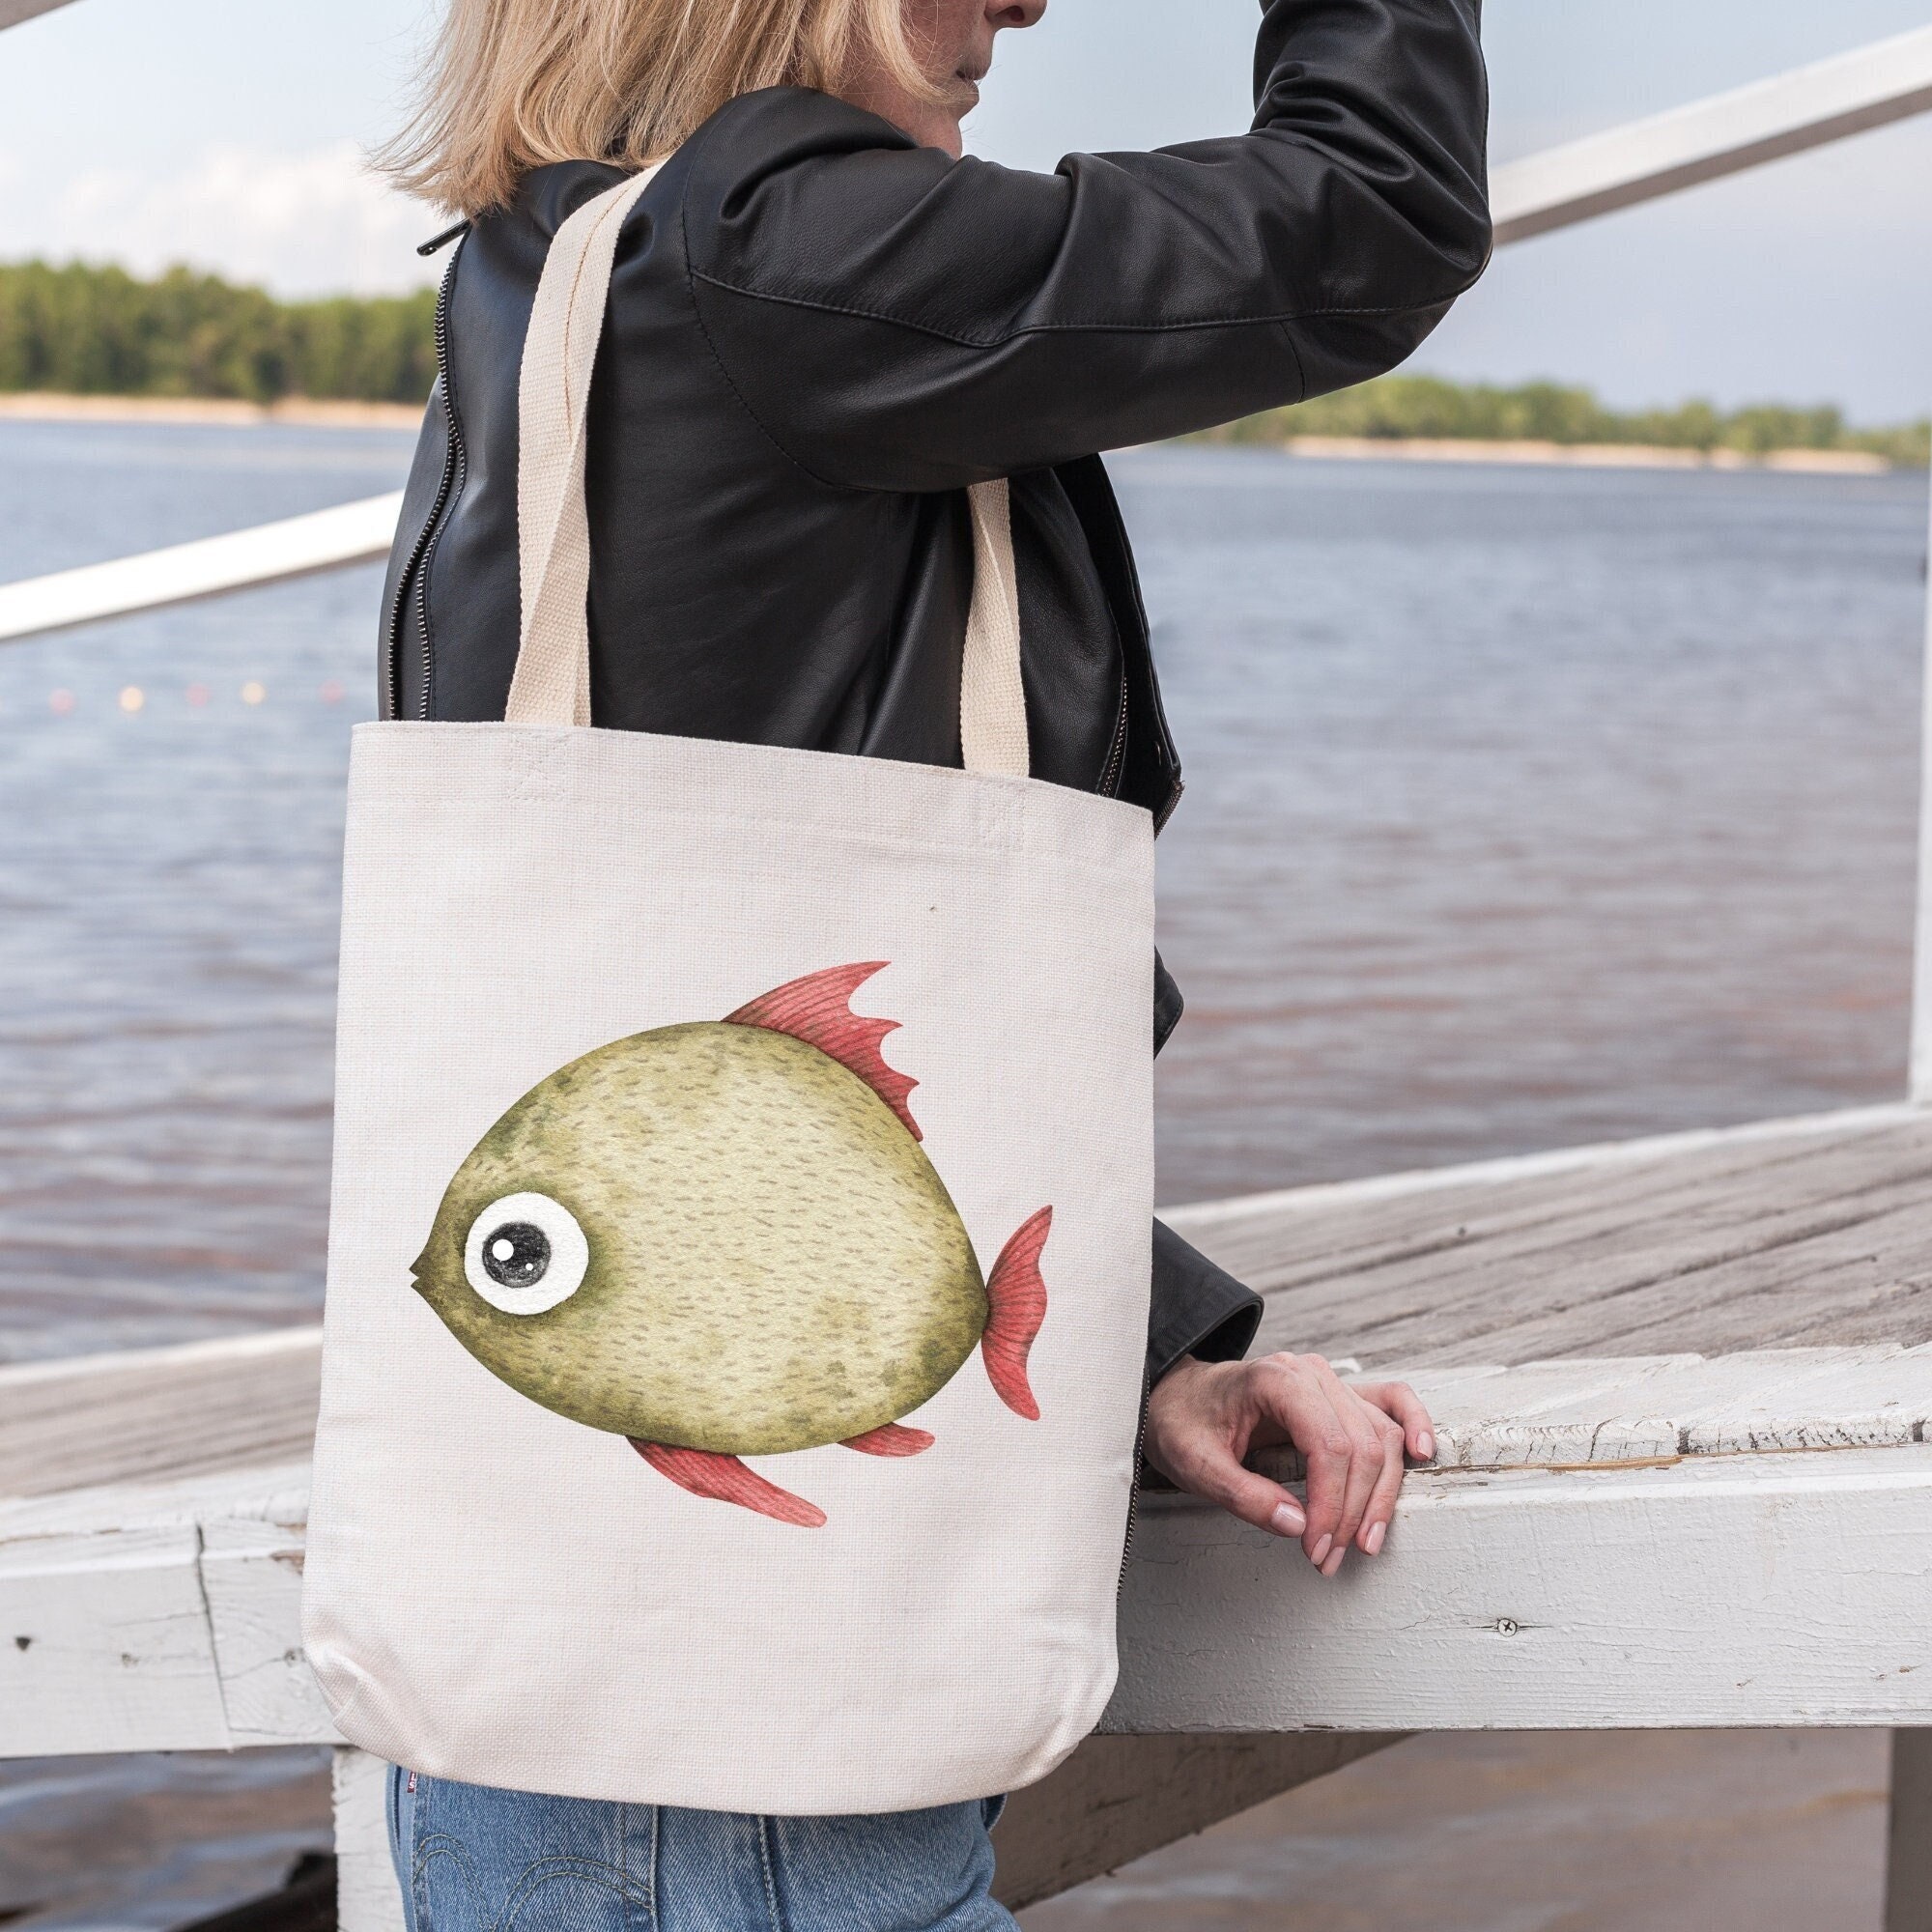 Fish Tote Bag, Basic Canvas Beach Tote With a Fun Big Eyed Fish